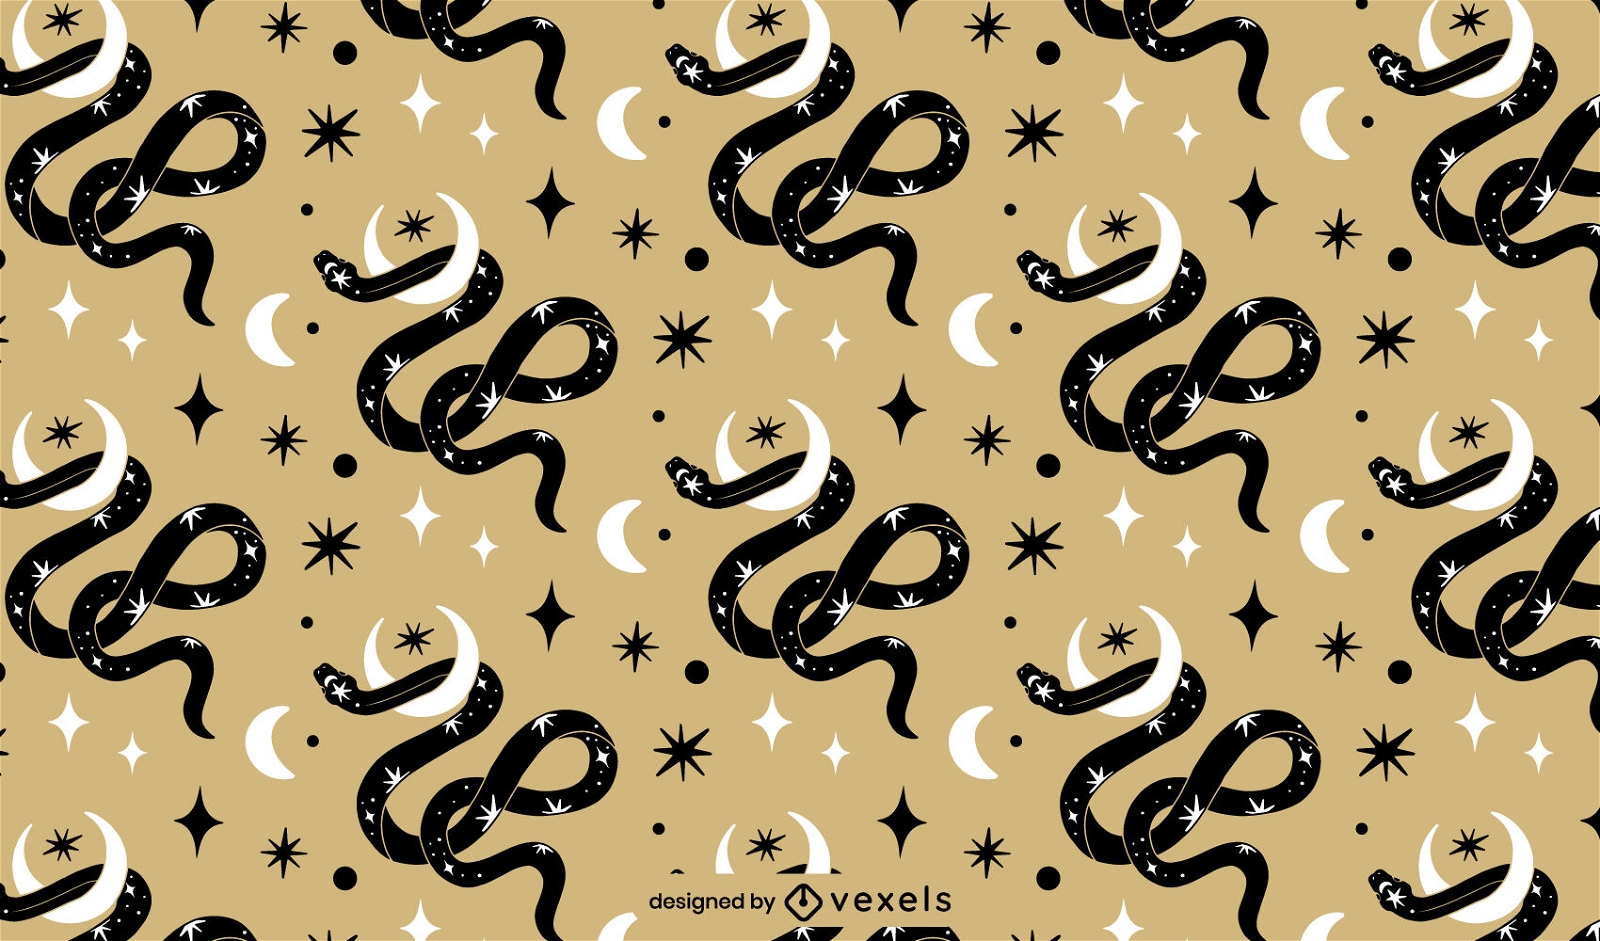 Moon snake esoteric pattern design